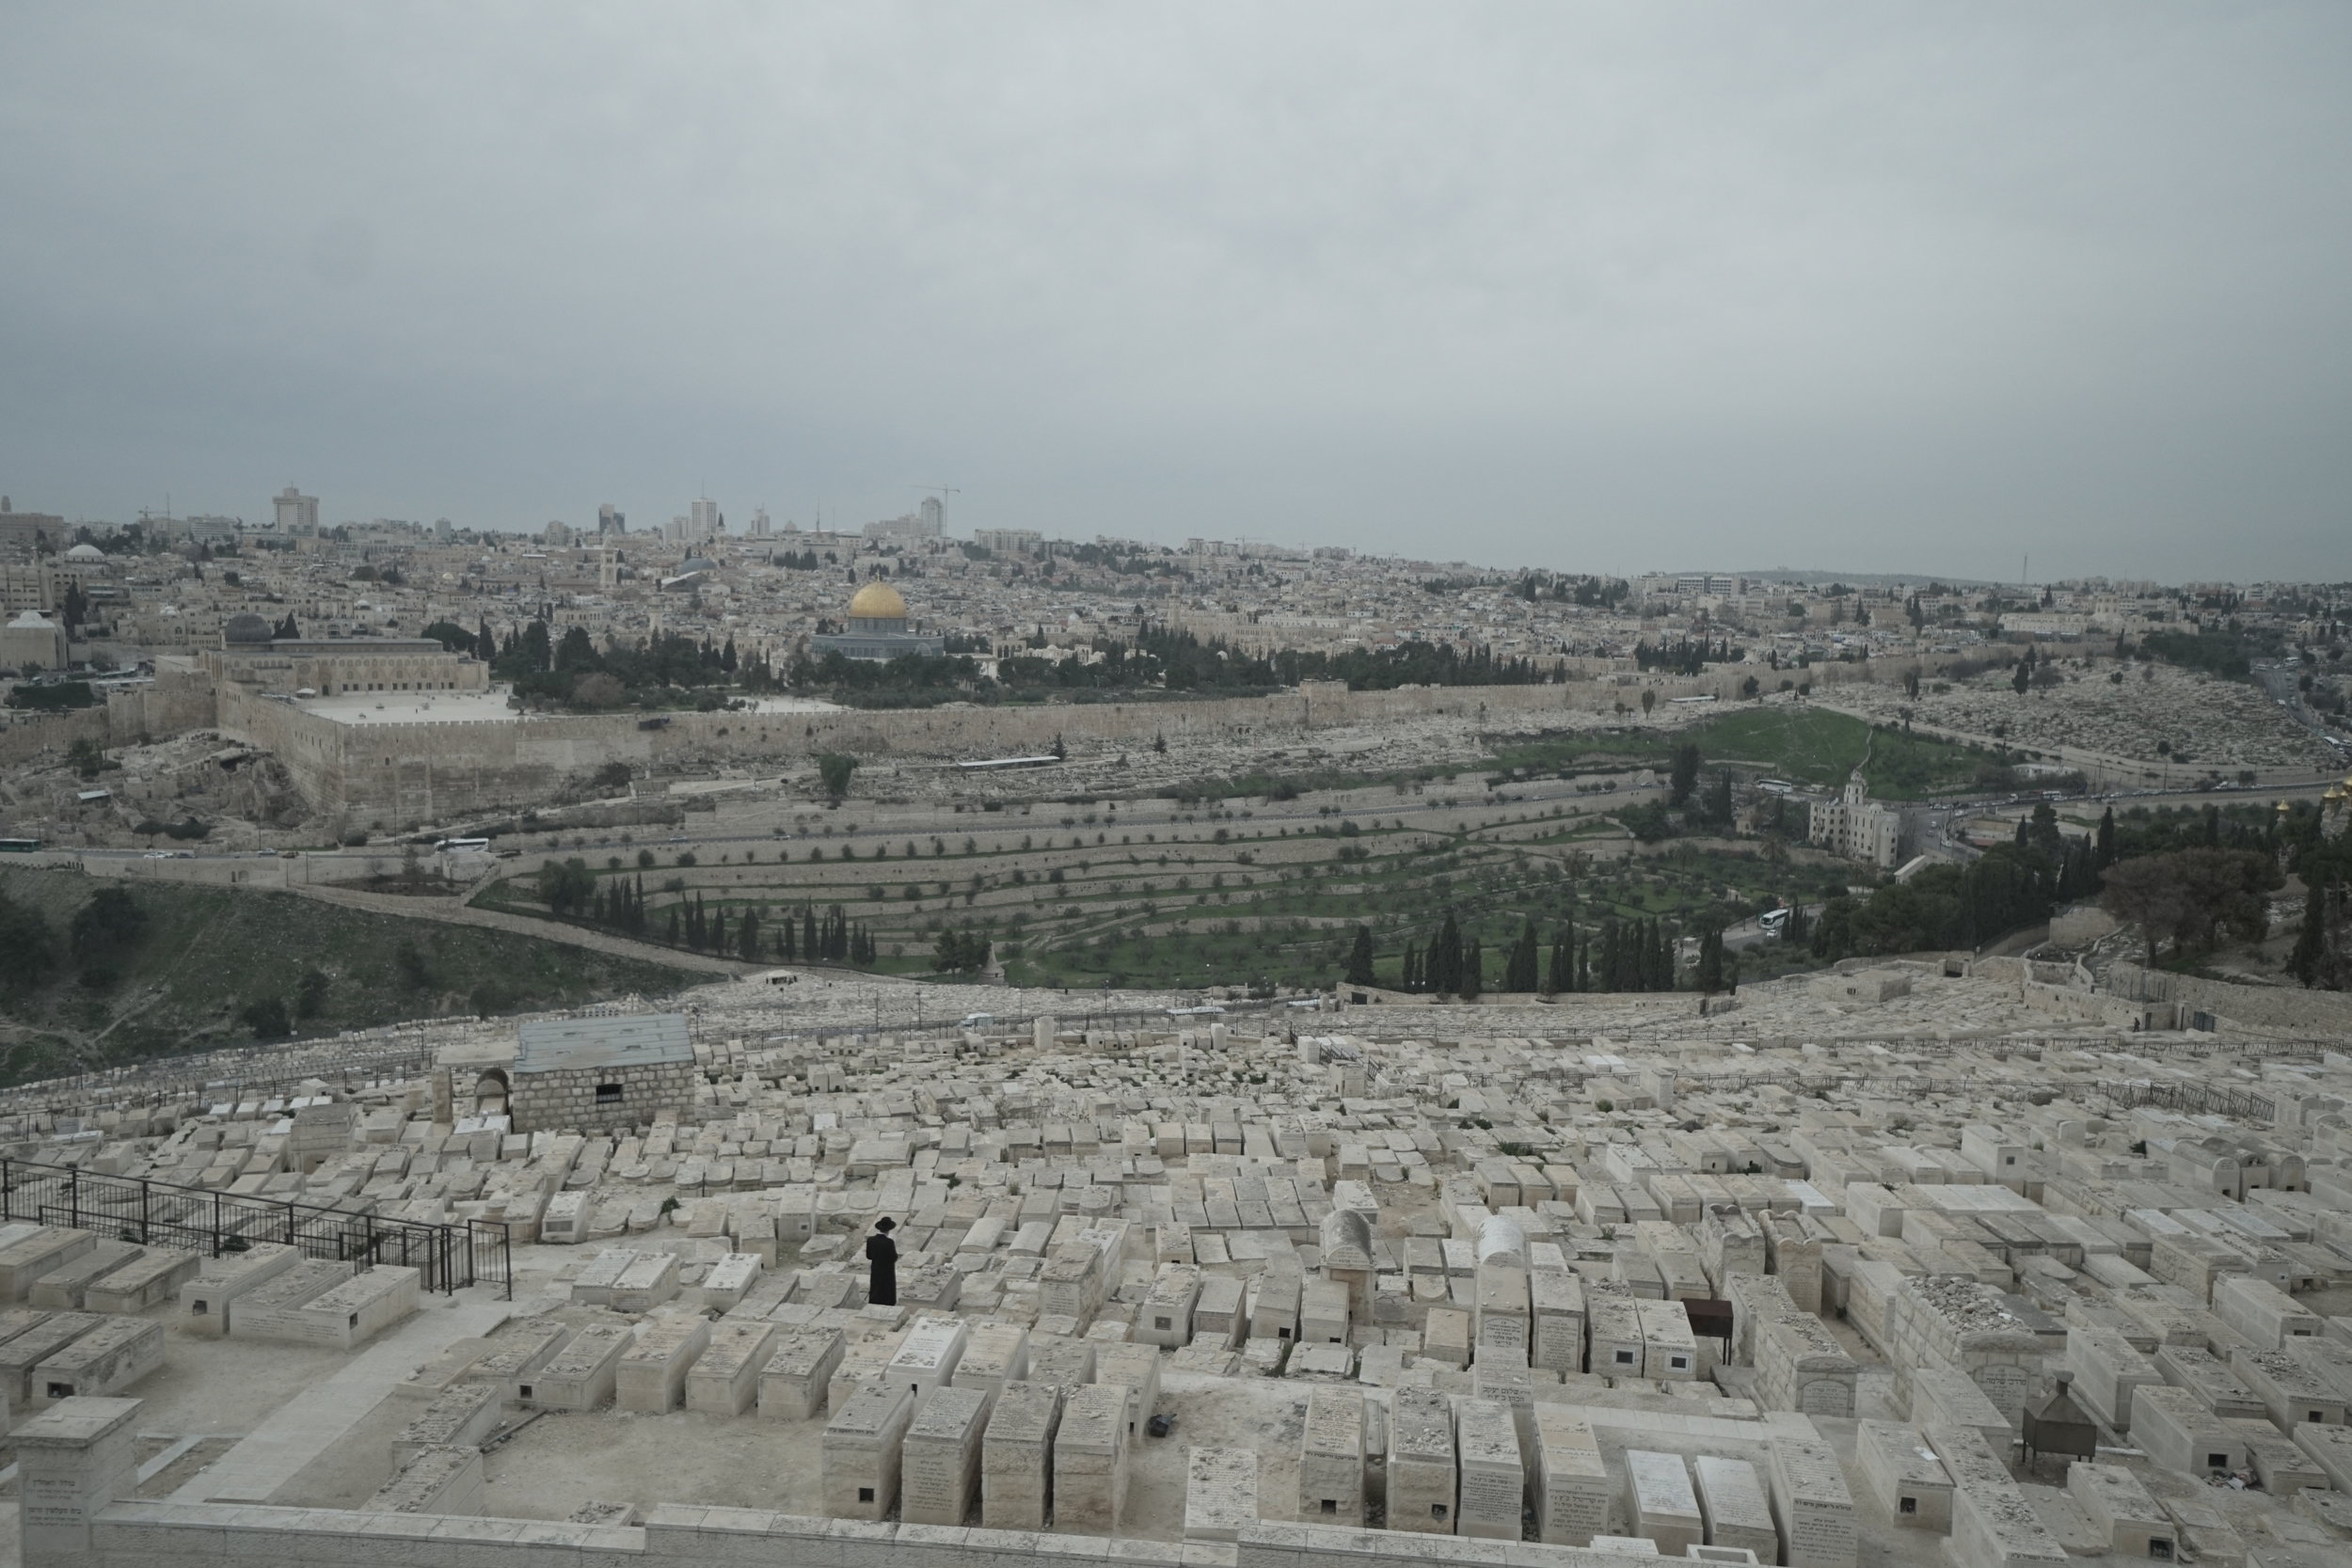 THE ENVIRONS OF JERUSALEM